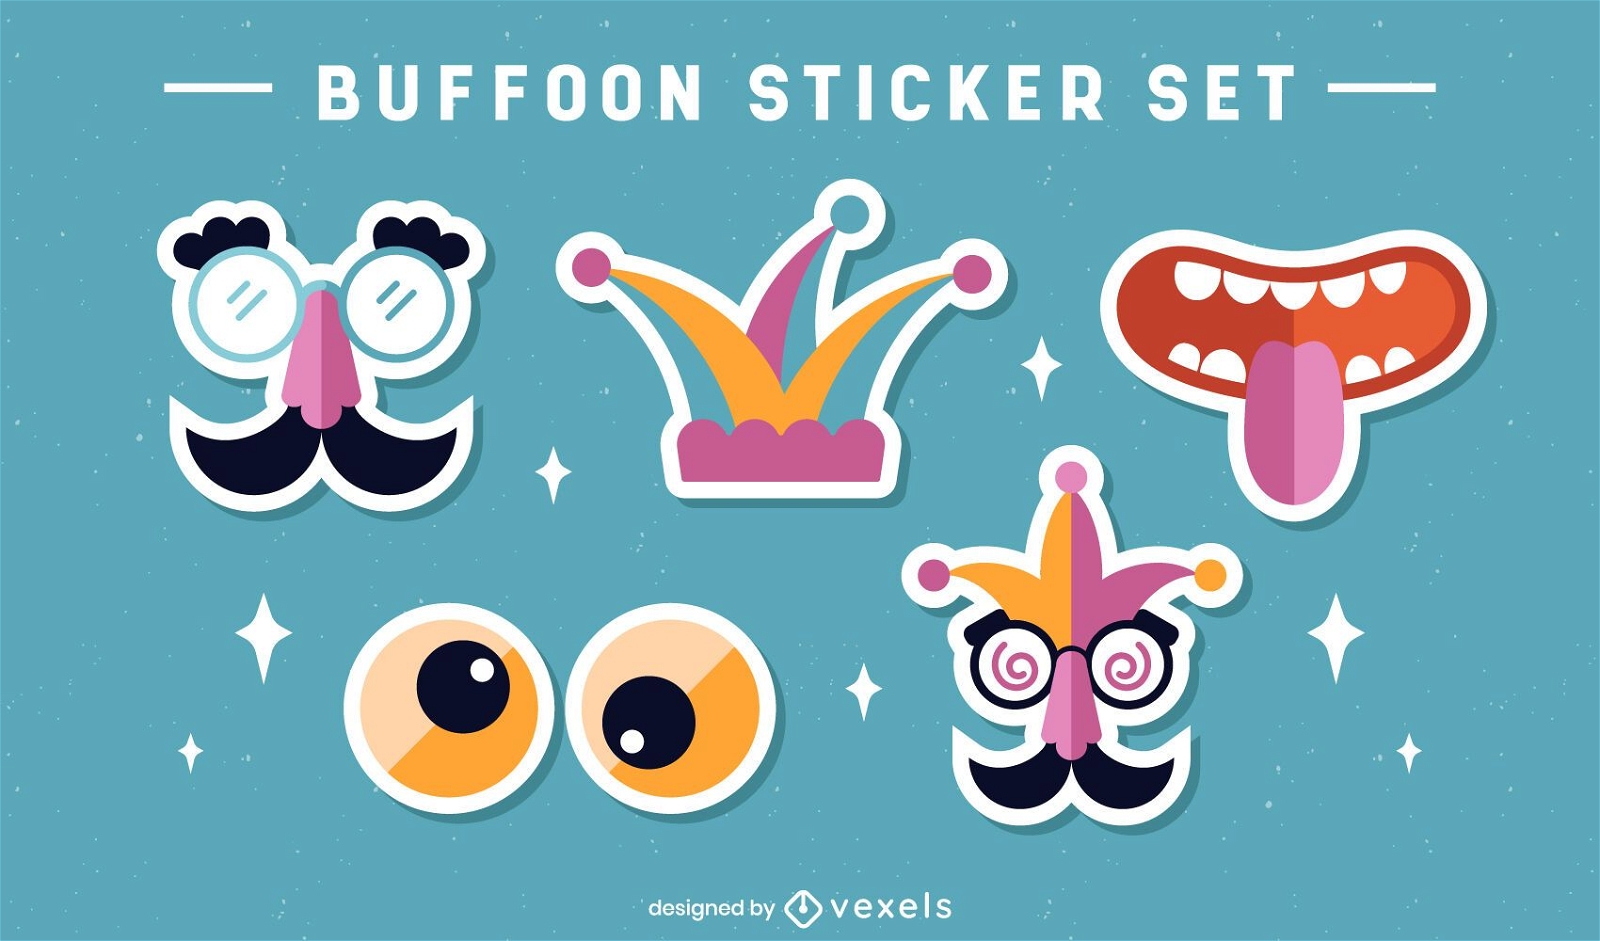 Buffoon sticker comedy set